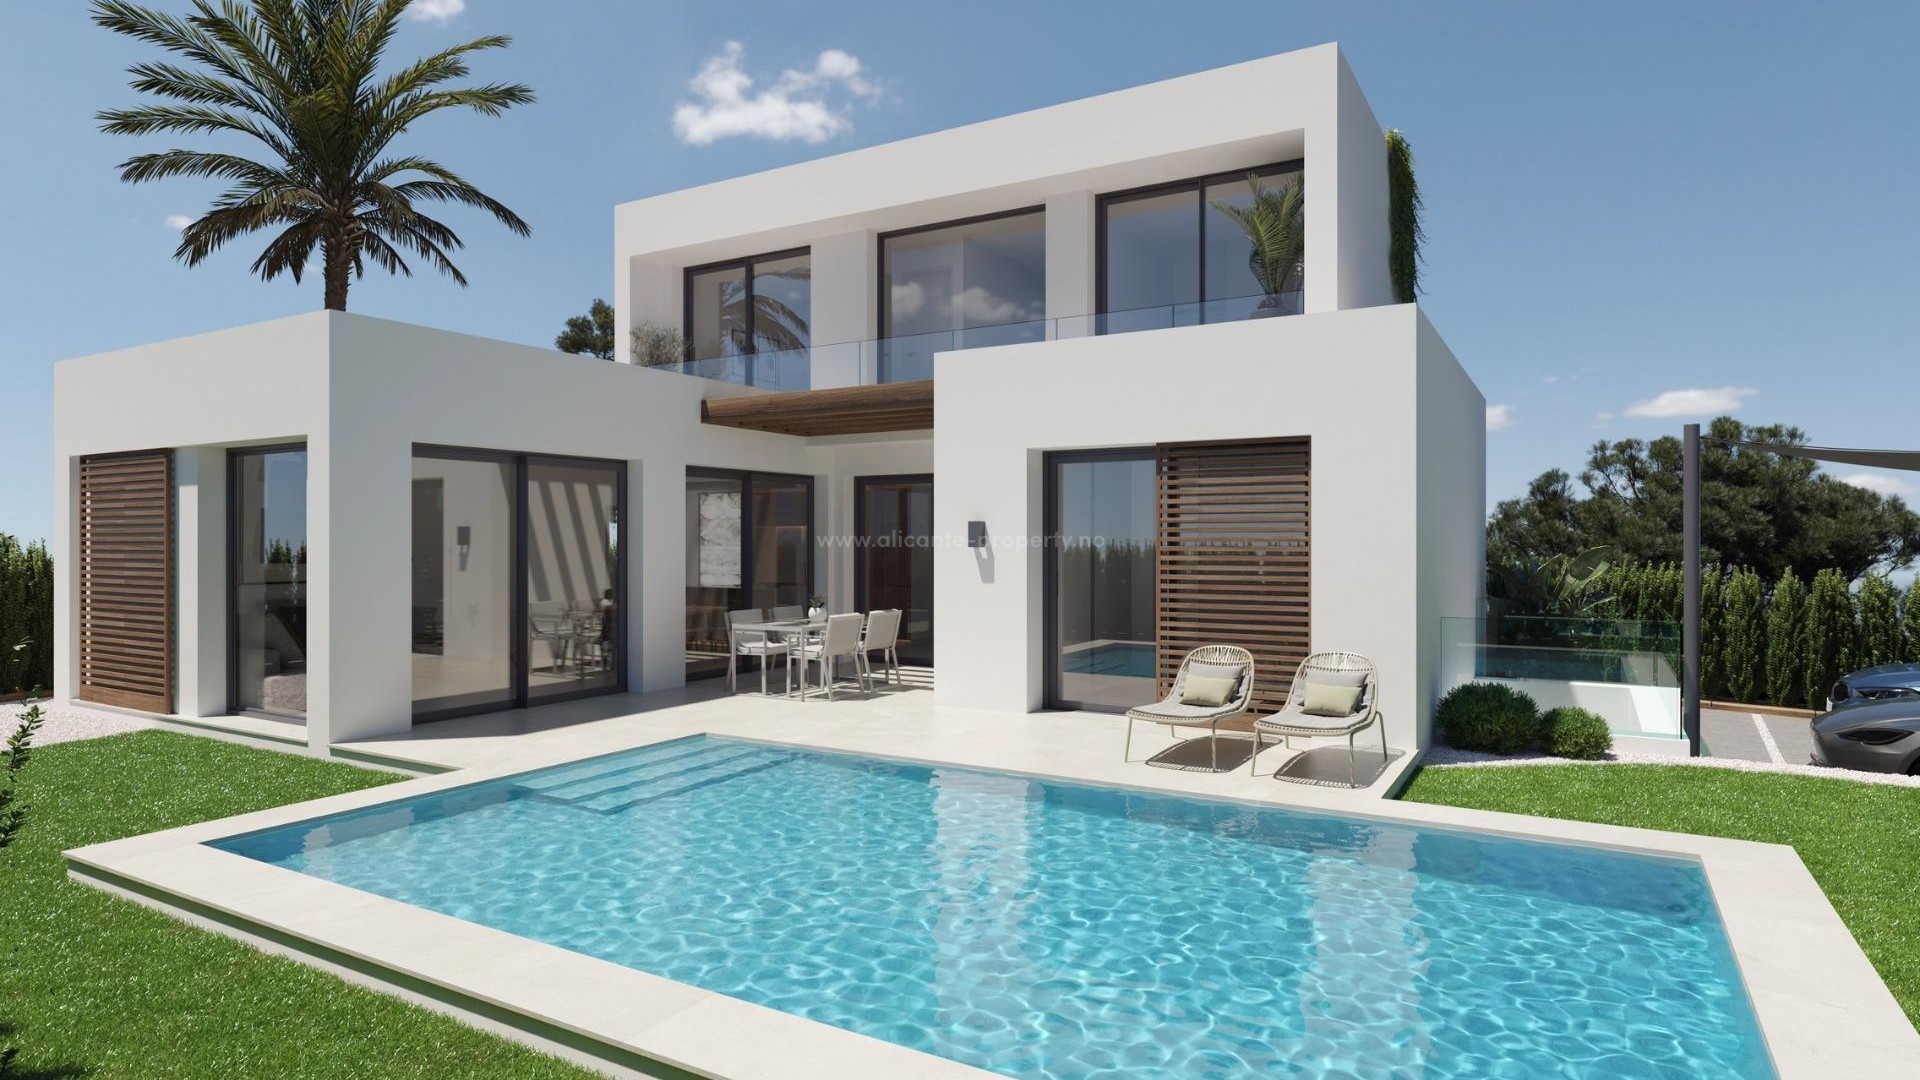 12 newly built villas/houses in Alfaz del Pi, 3 bedrooms, 2 bathrooms, garden with swimming pool, fantastic views of the Mediterranean